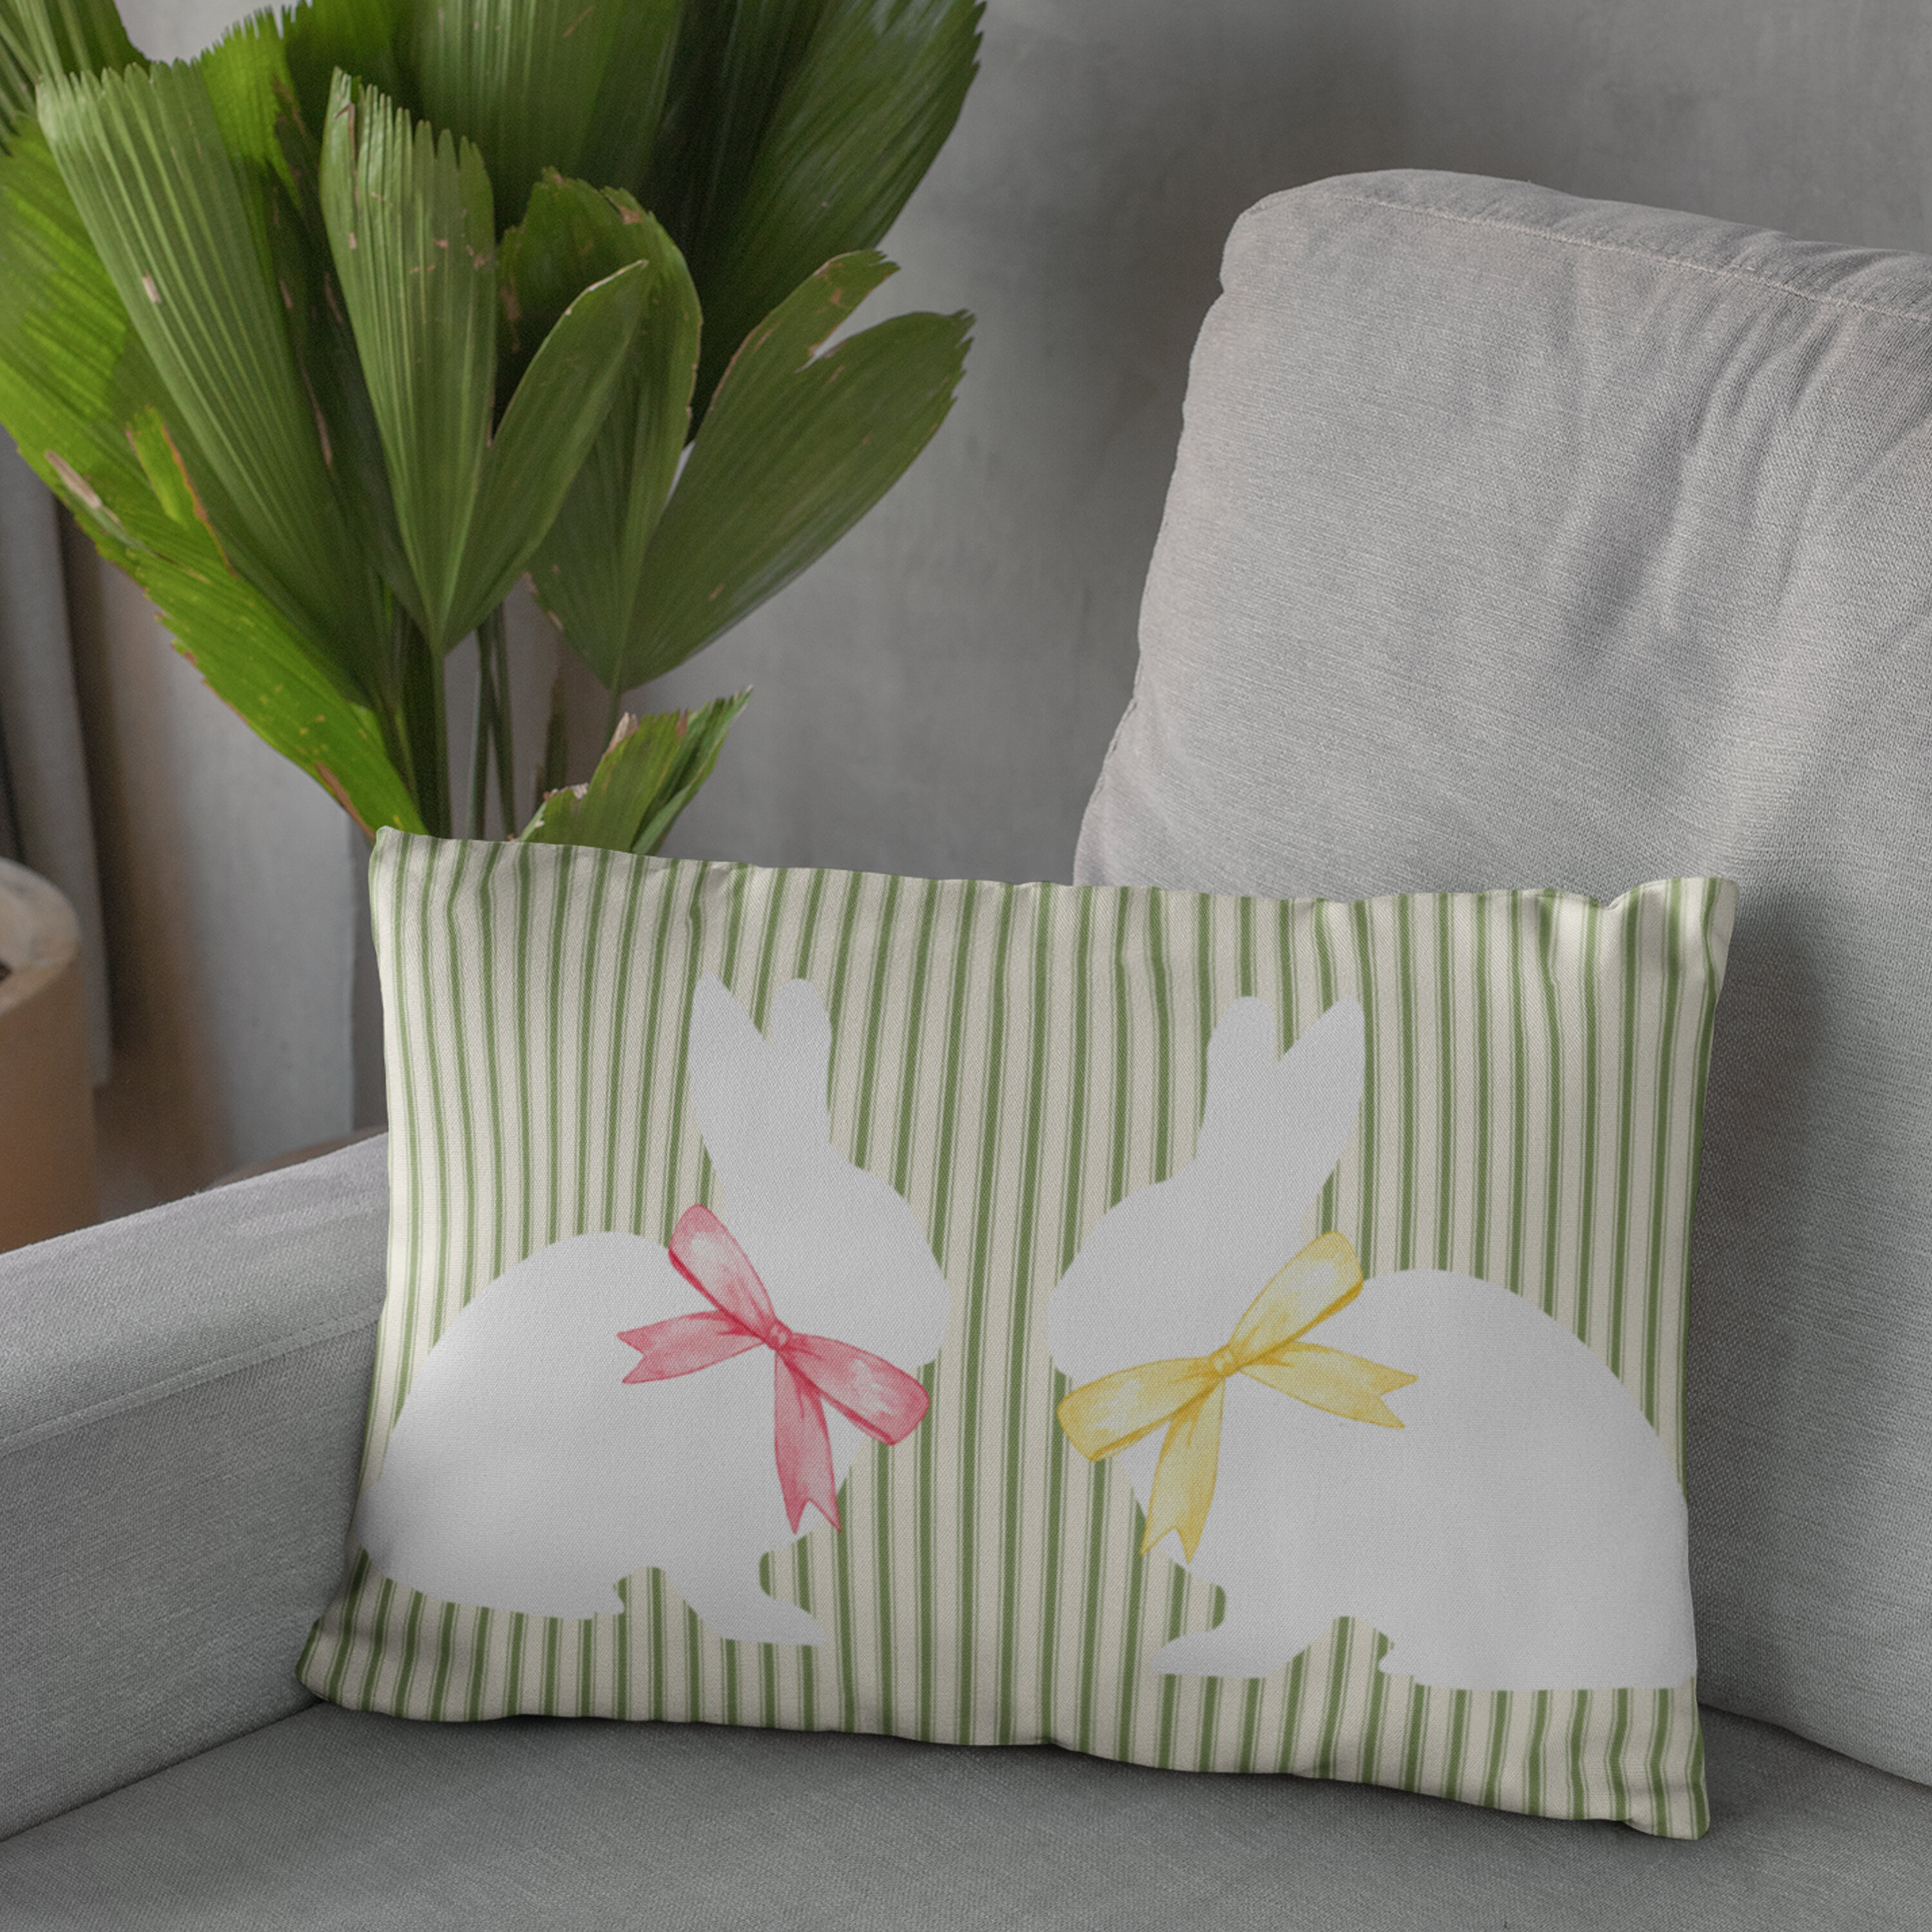 Flowers Vivid Rabbits Throw Pillow Case Linen Bunny Cushion Cover Easter Decor 